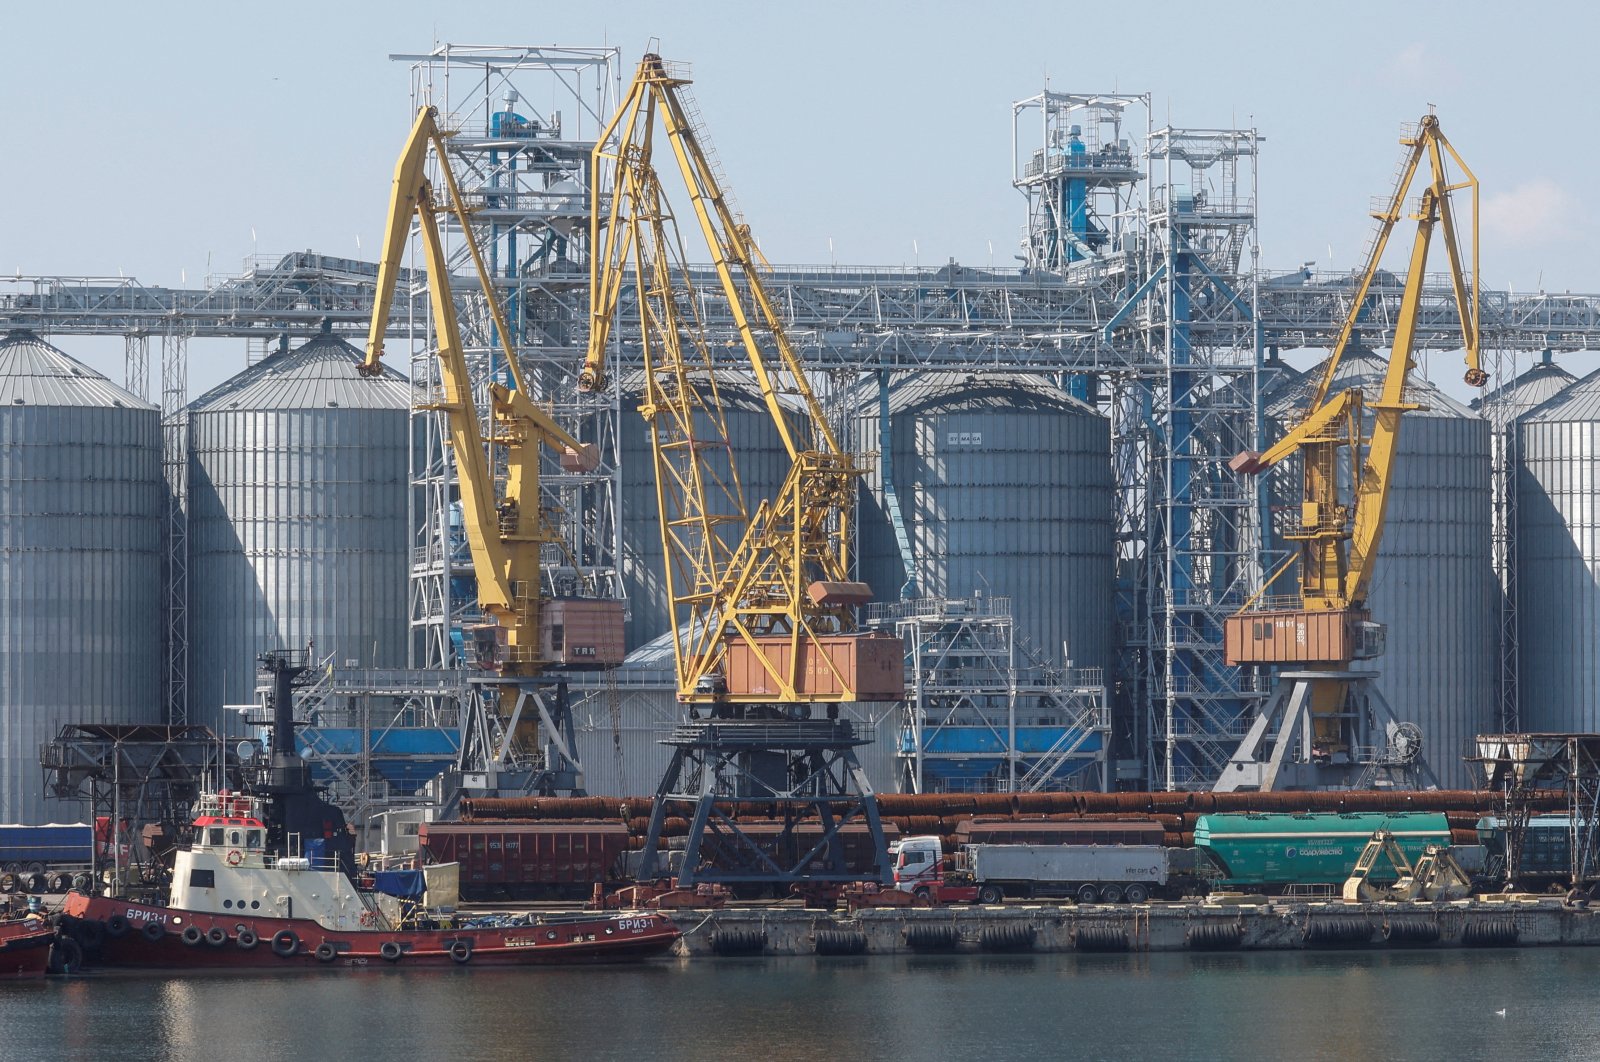 Menambahkan pelabuhan baru di bawah kesepakatan biji-bijian Ukraina tidak mungkin terjadi dalam waktu dekat: PBB